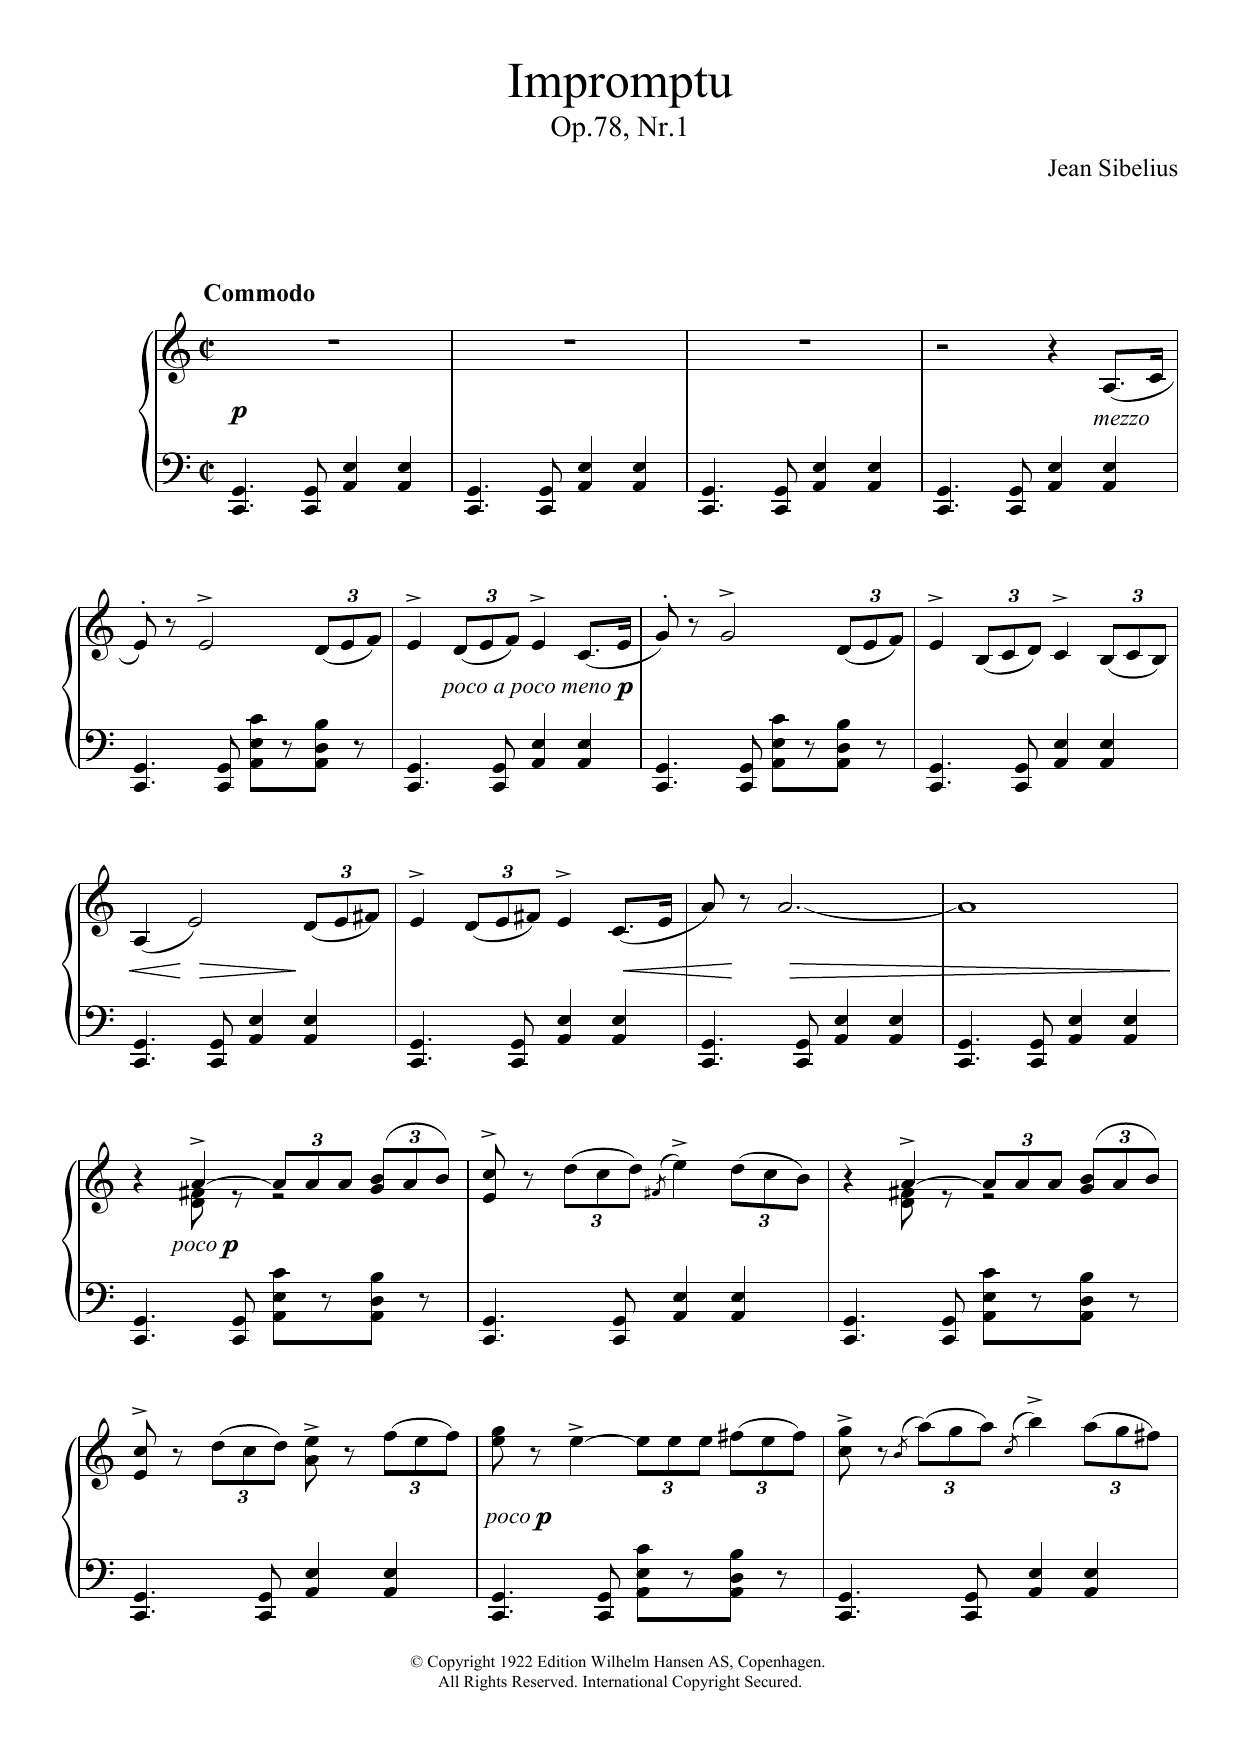 Download Jean Sibelius Impromptu, Op.78 No.1 Sheet Music